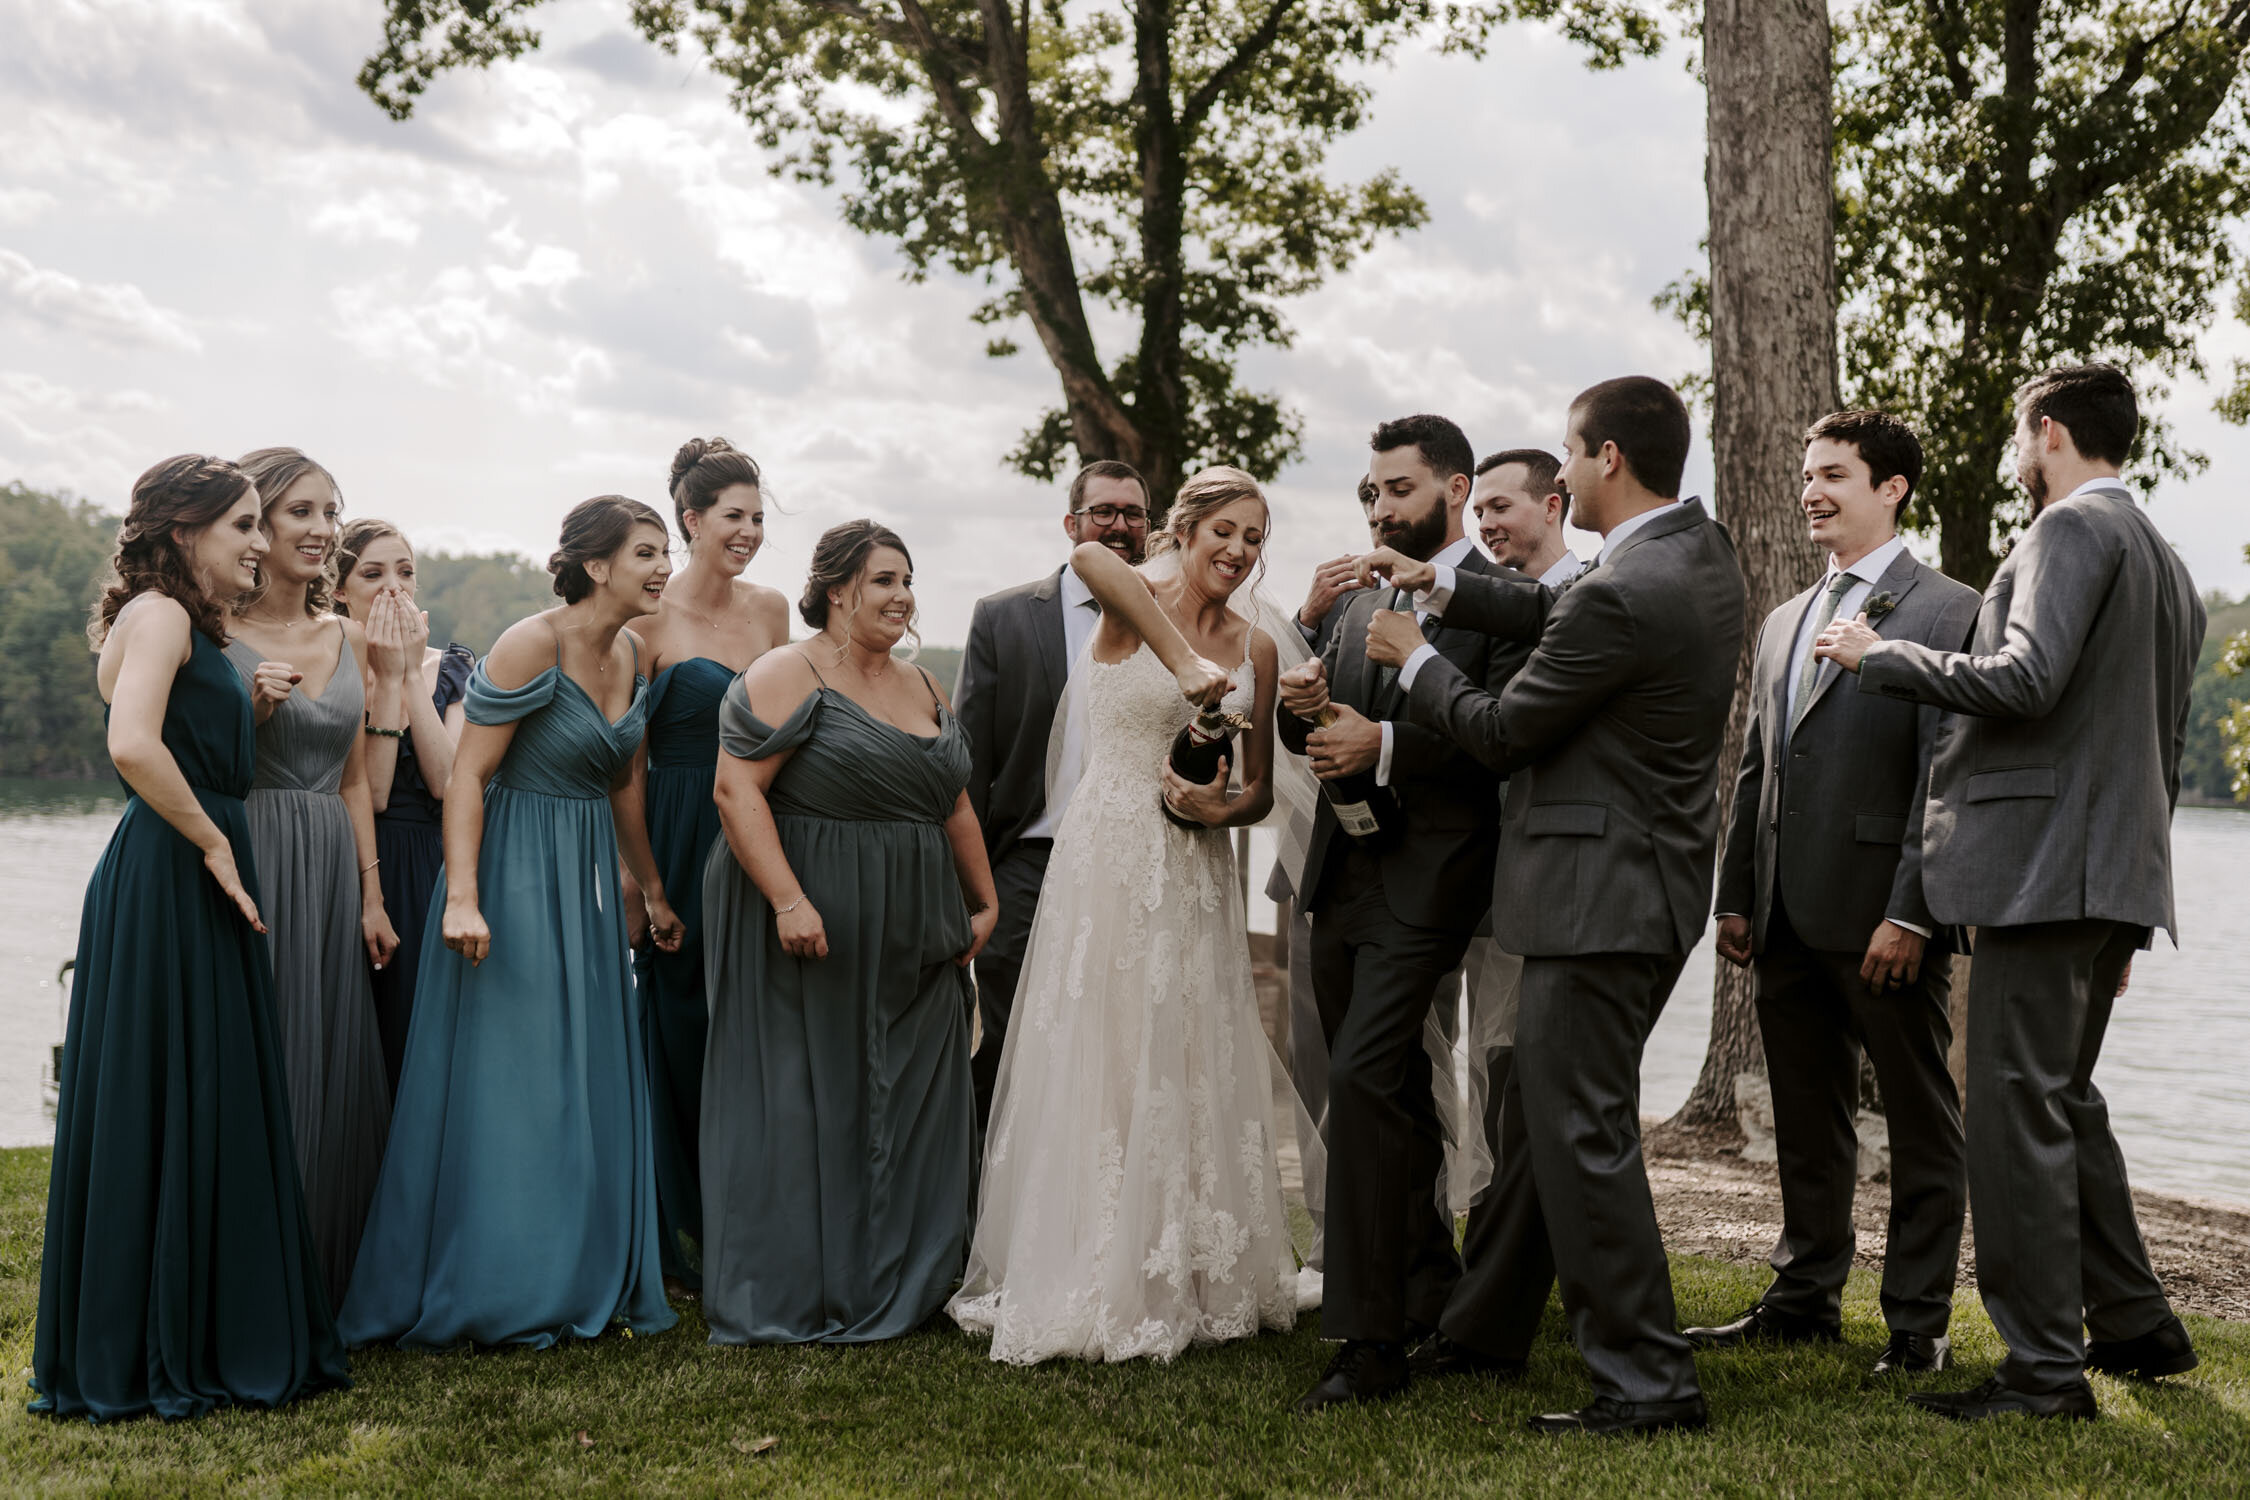 Fun Wedding Party Portraits popping champagne at Bella Collina | By Greensboro, NC Wedding Photographer: Kayli LaFon Photography